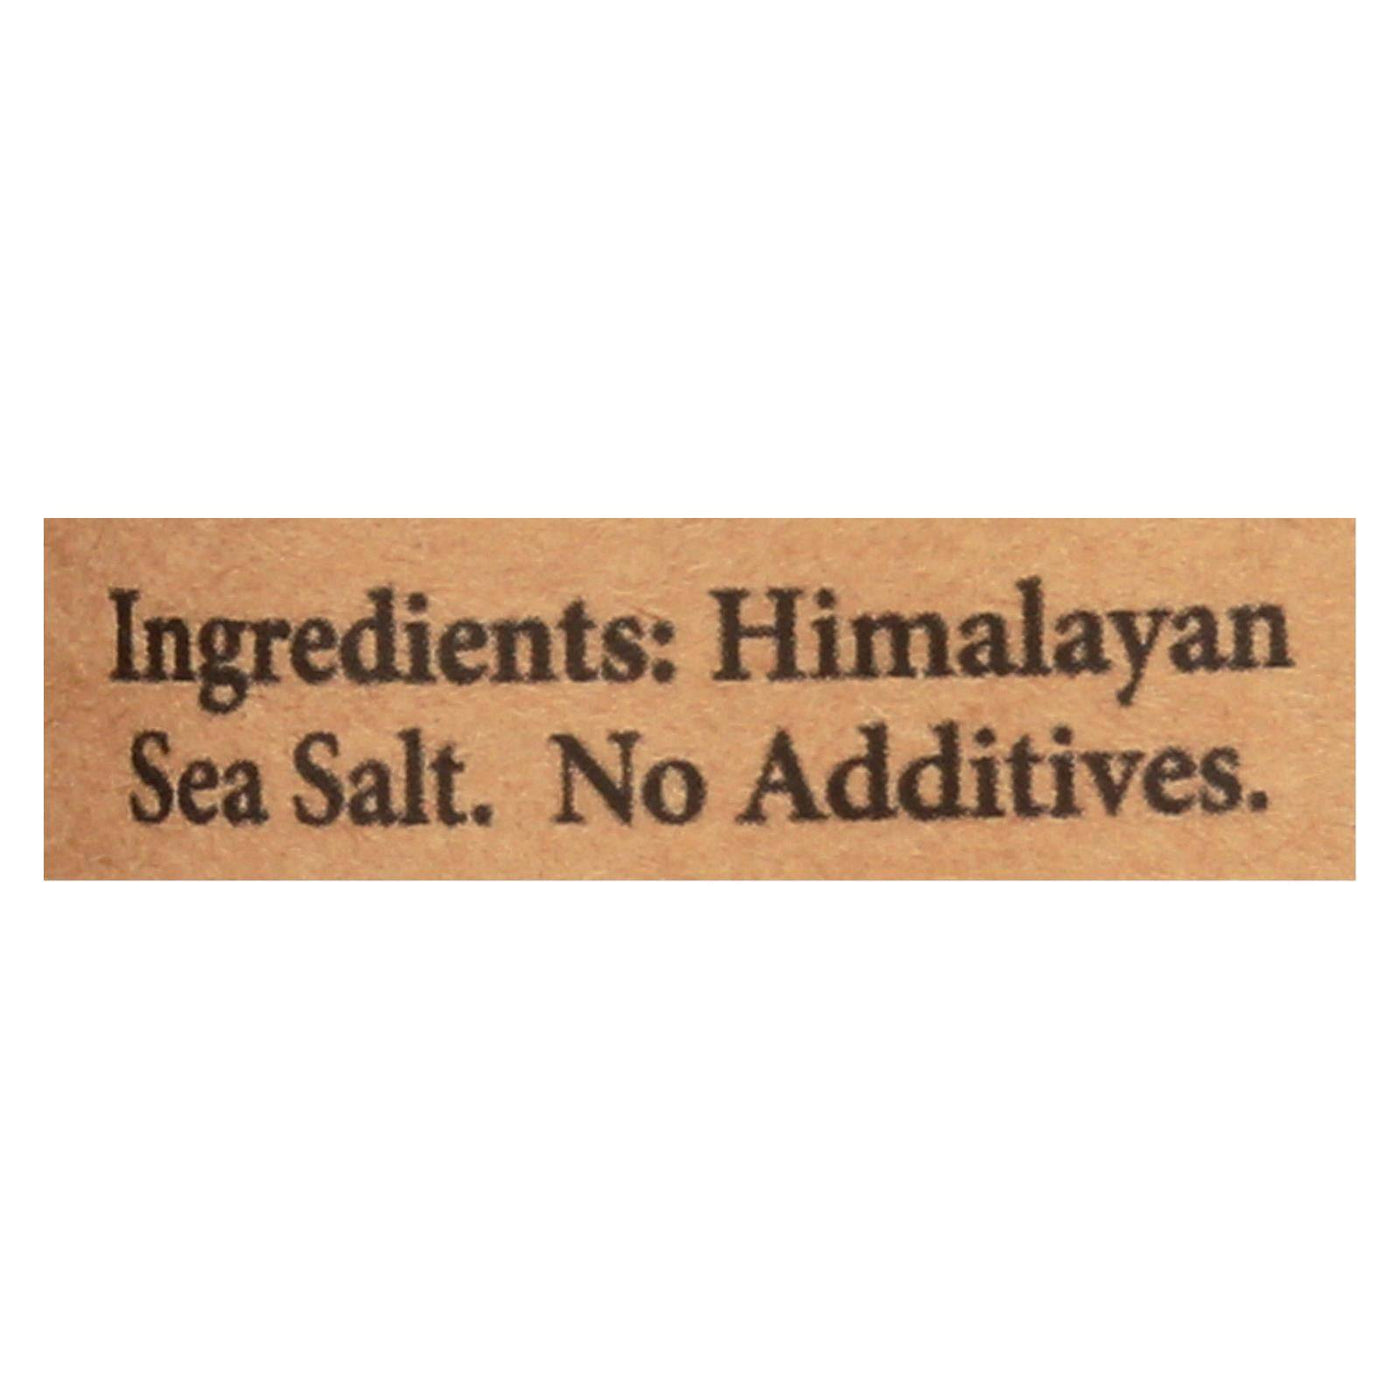 Buy Himalasalt Primordial Himalayan Sea Salt - Fine Grain - Shaker - 6 Oz - Case Of 6  at OnlyNaturals.us